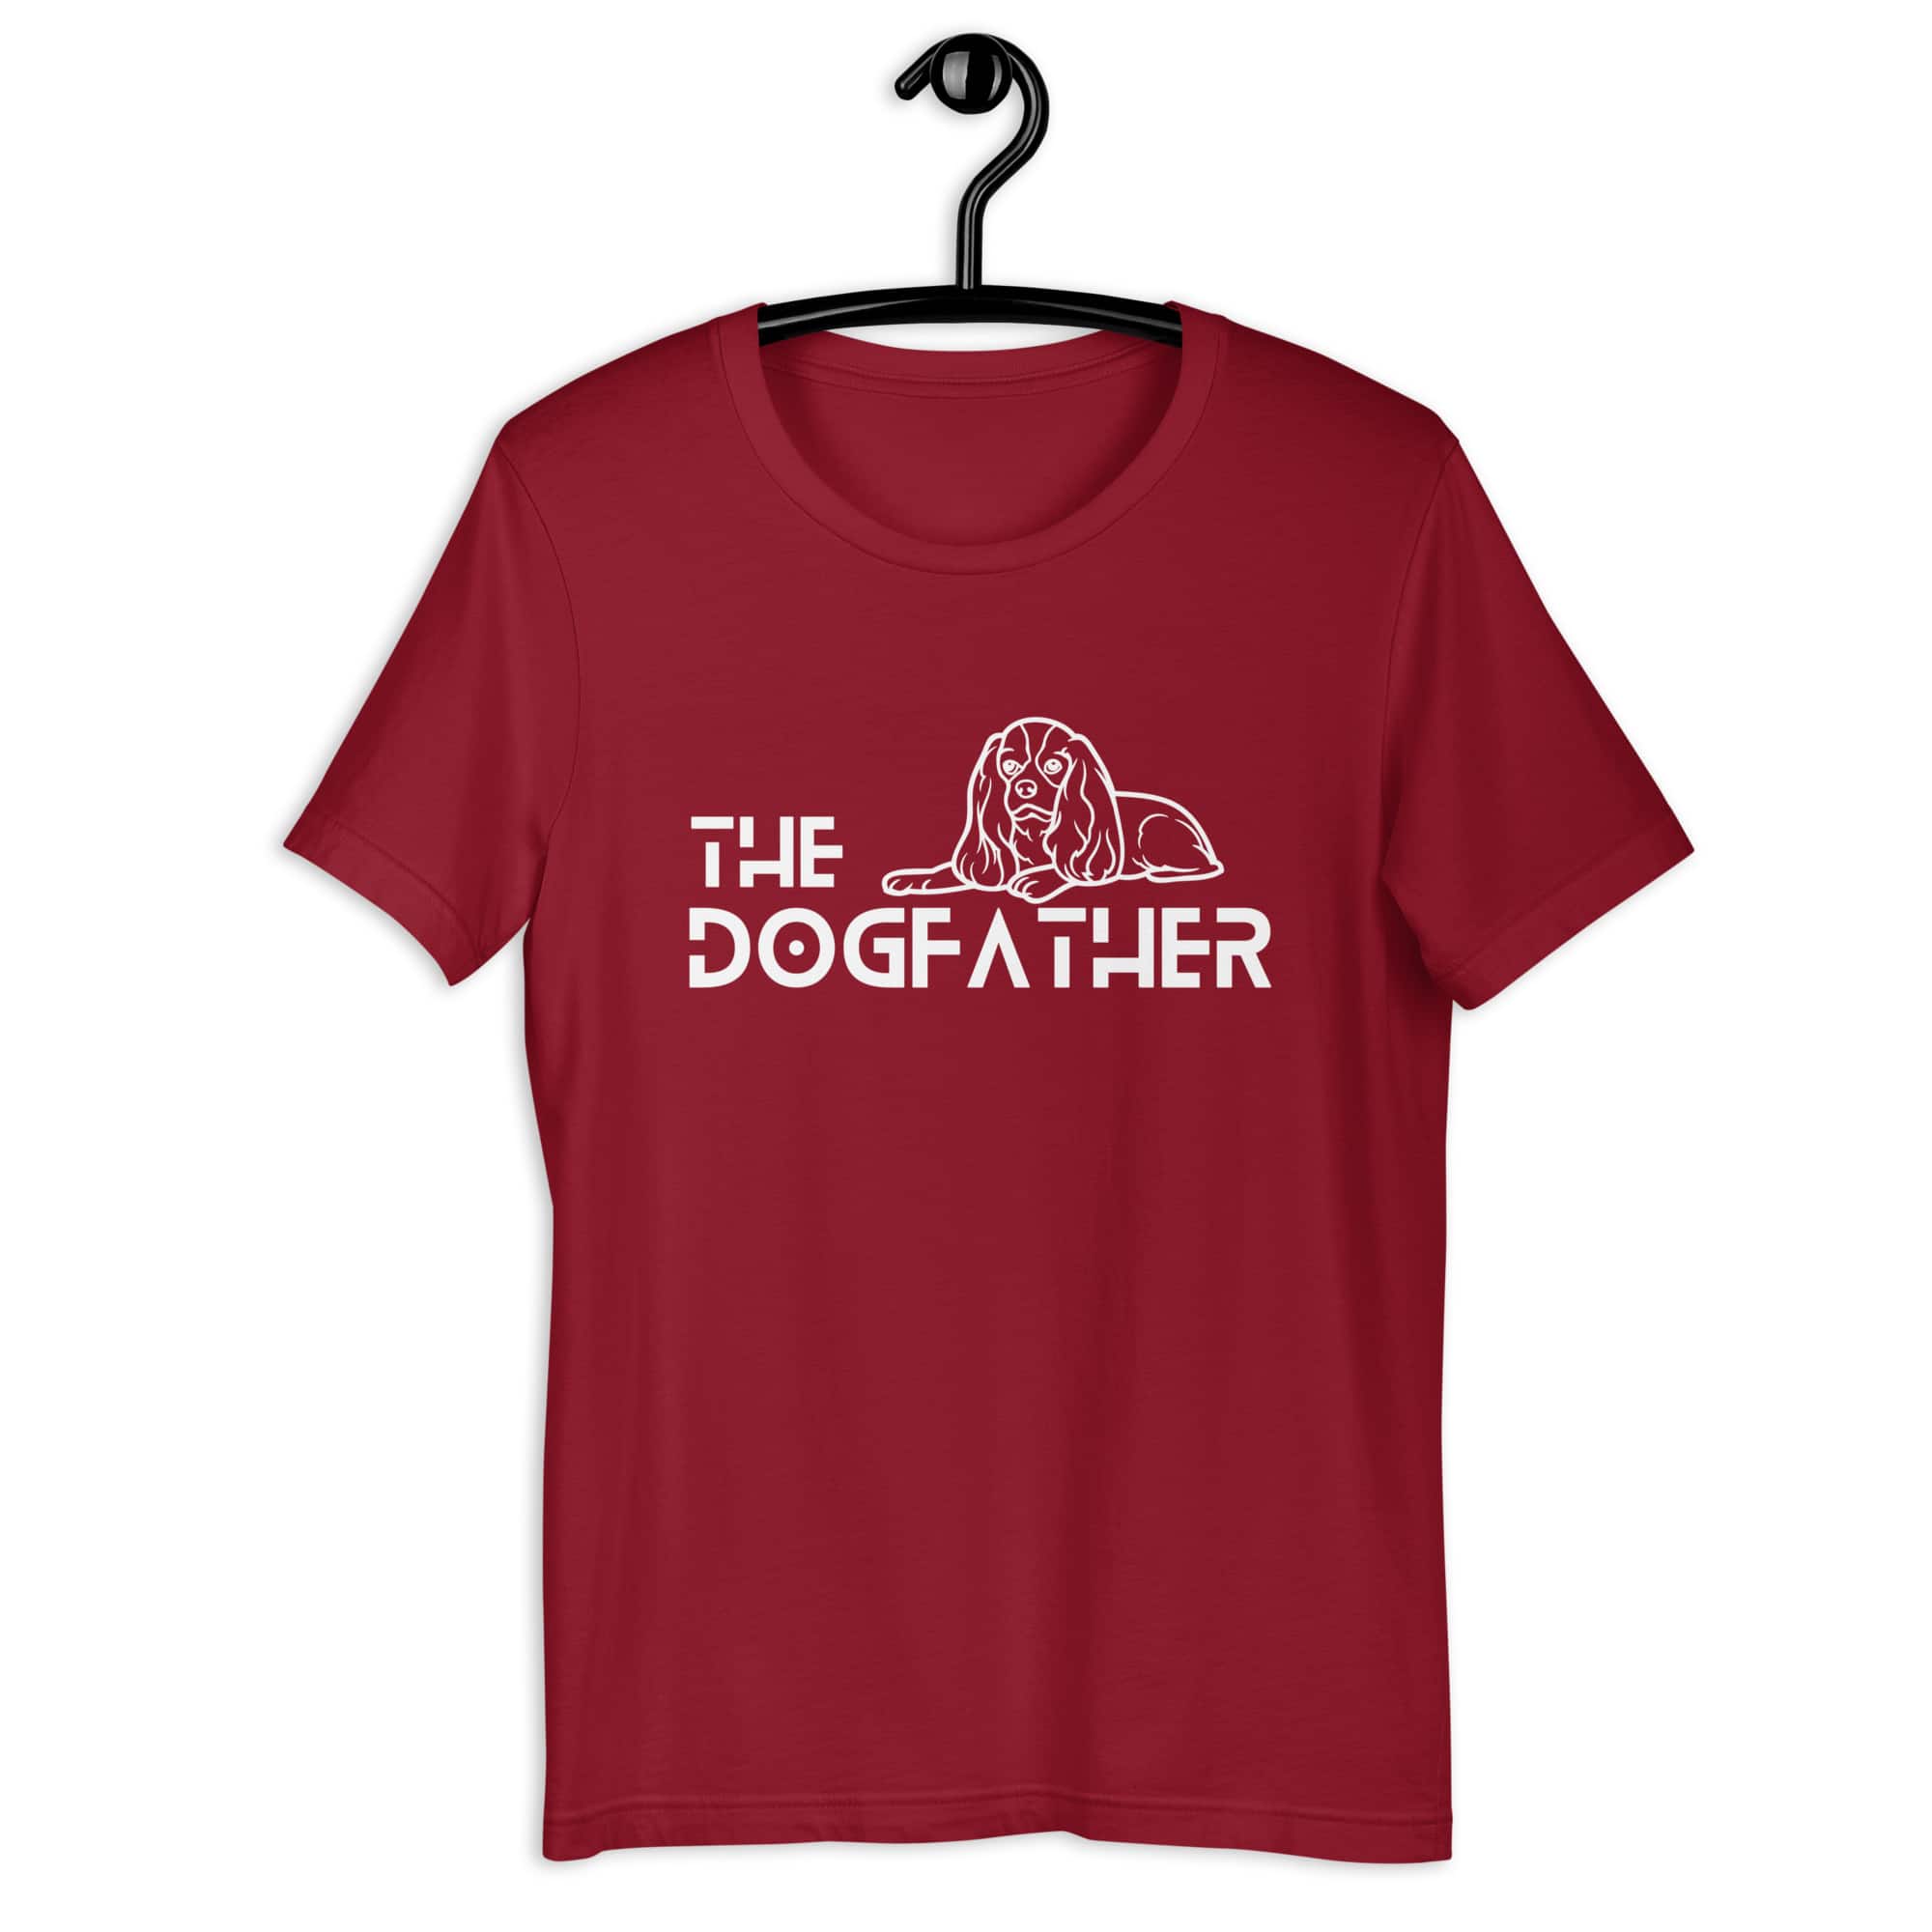 The Dogfather Hounds Unisex T-Shirt. Cardinal